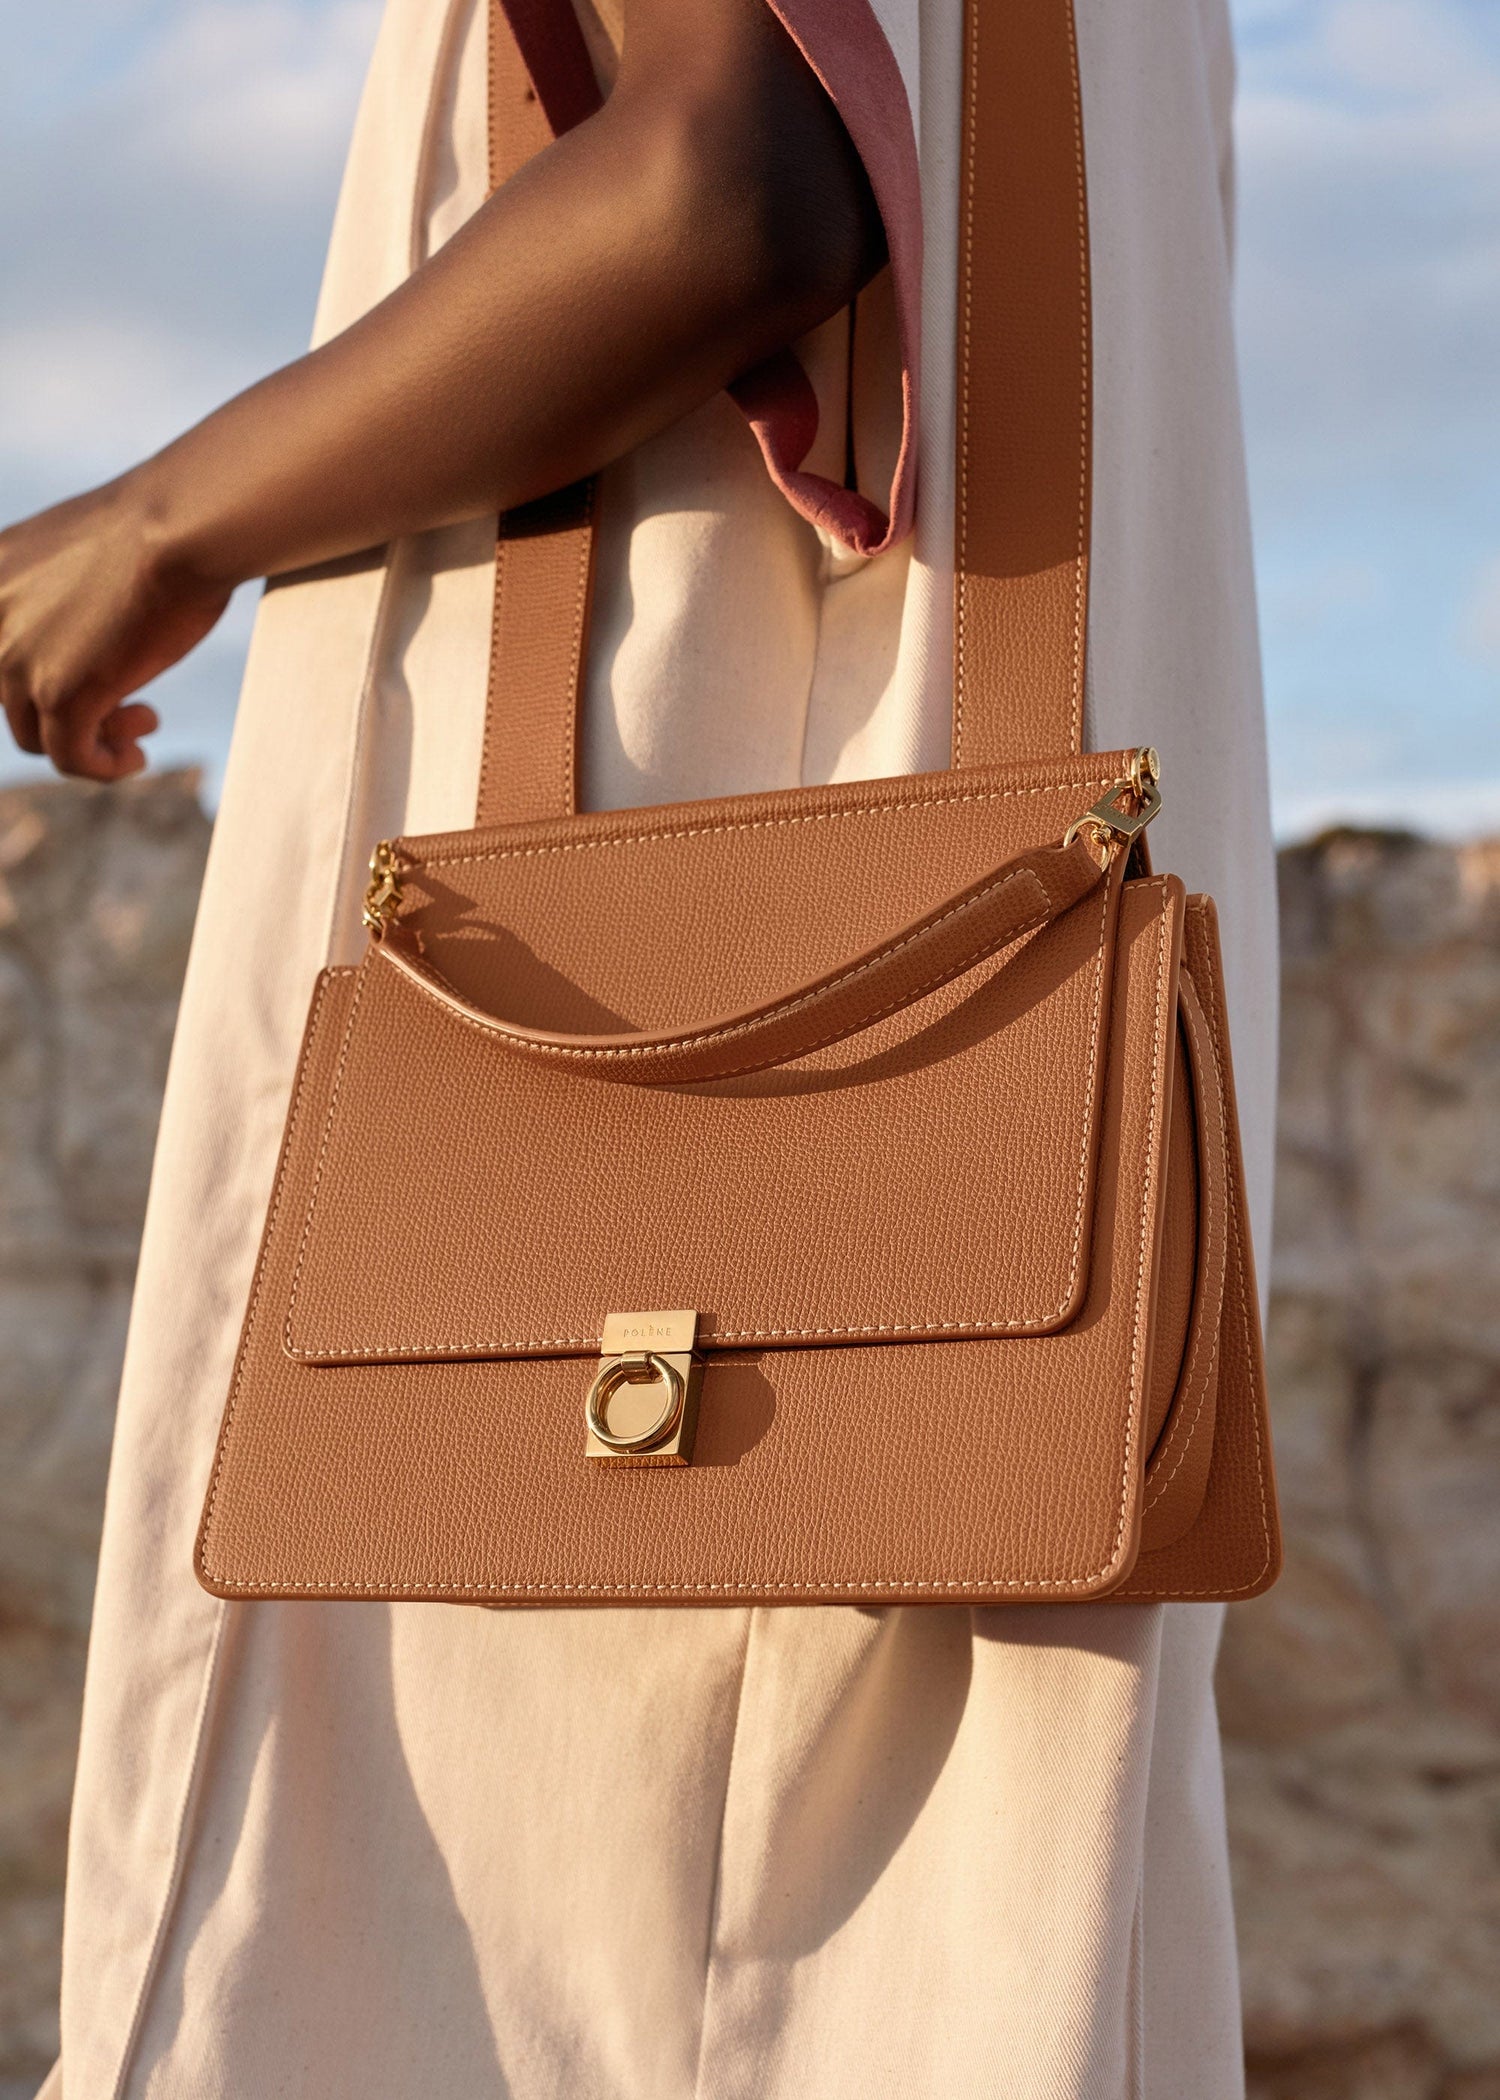 Polène | Bag - Numéro Sept - Camel Textured leather